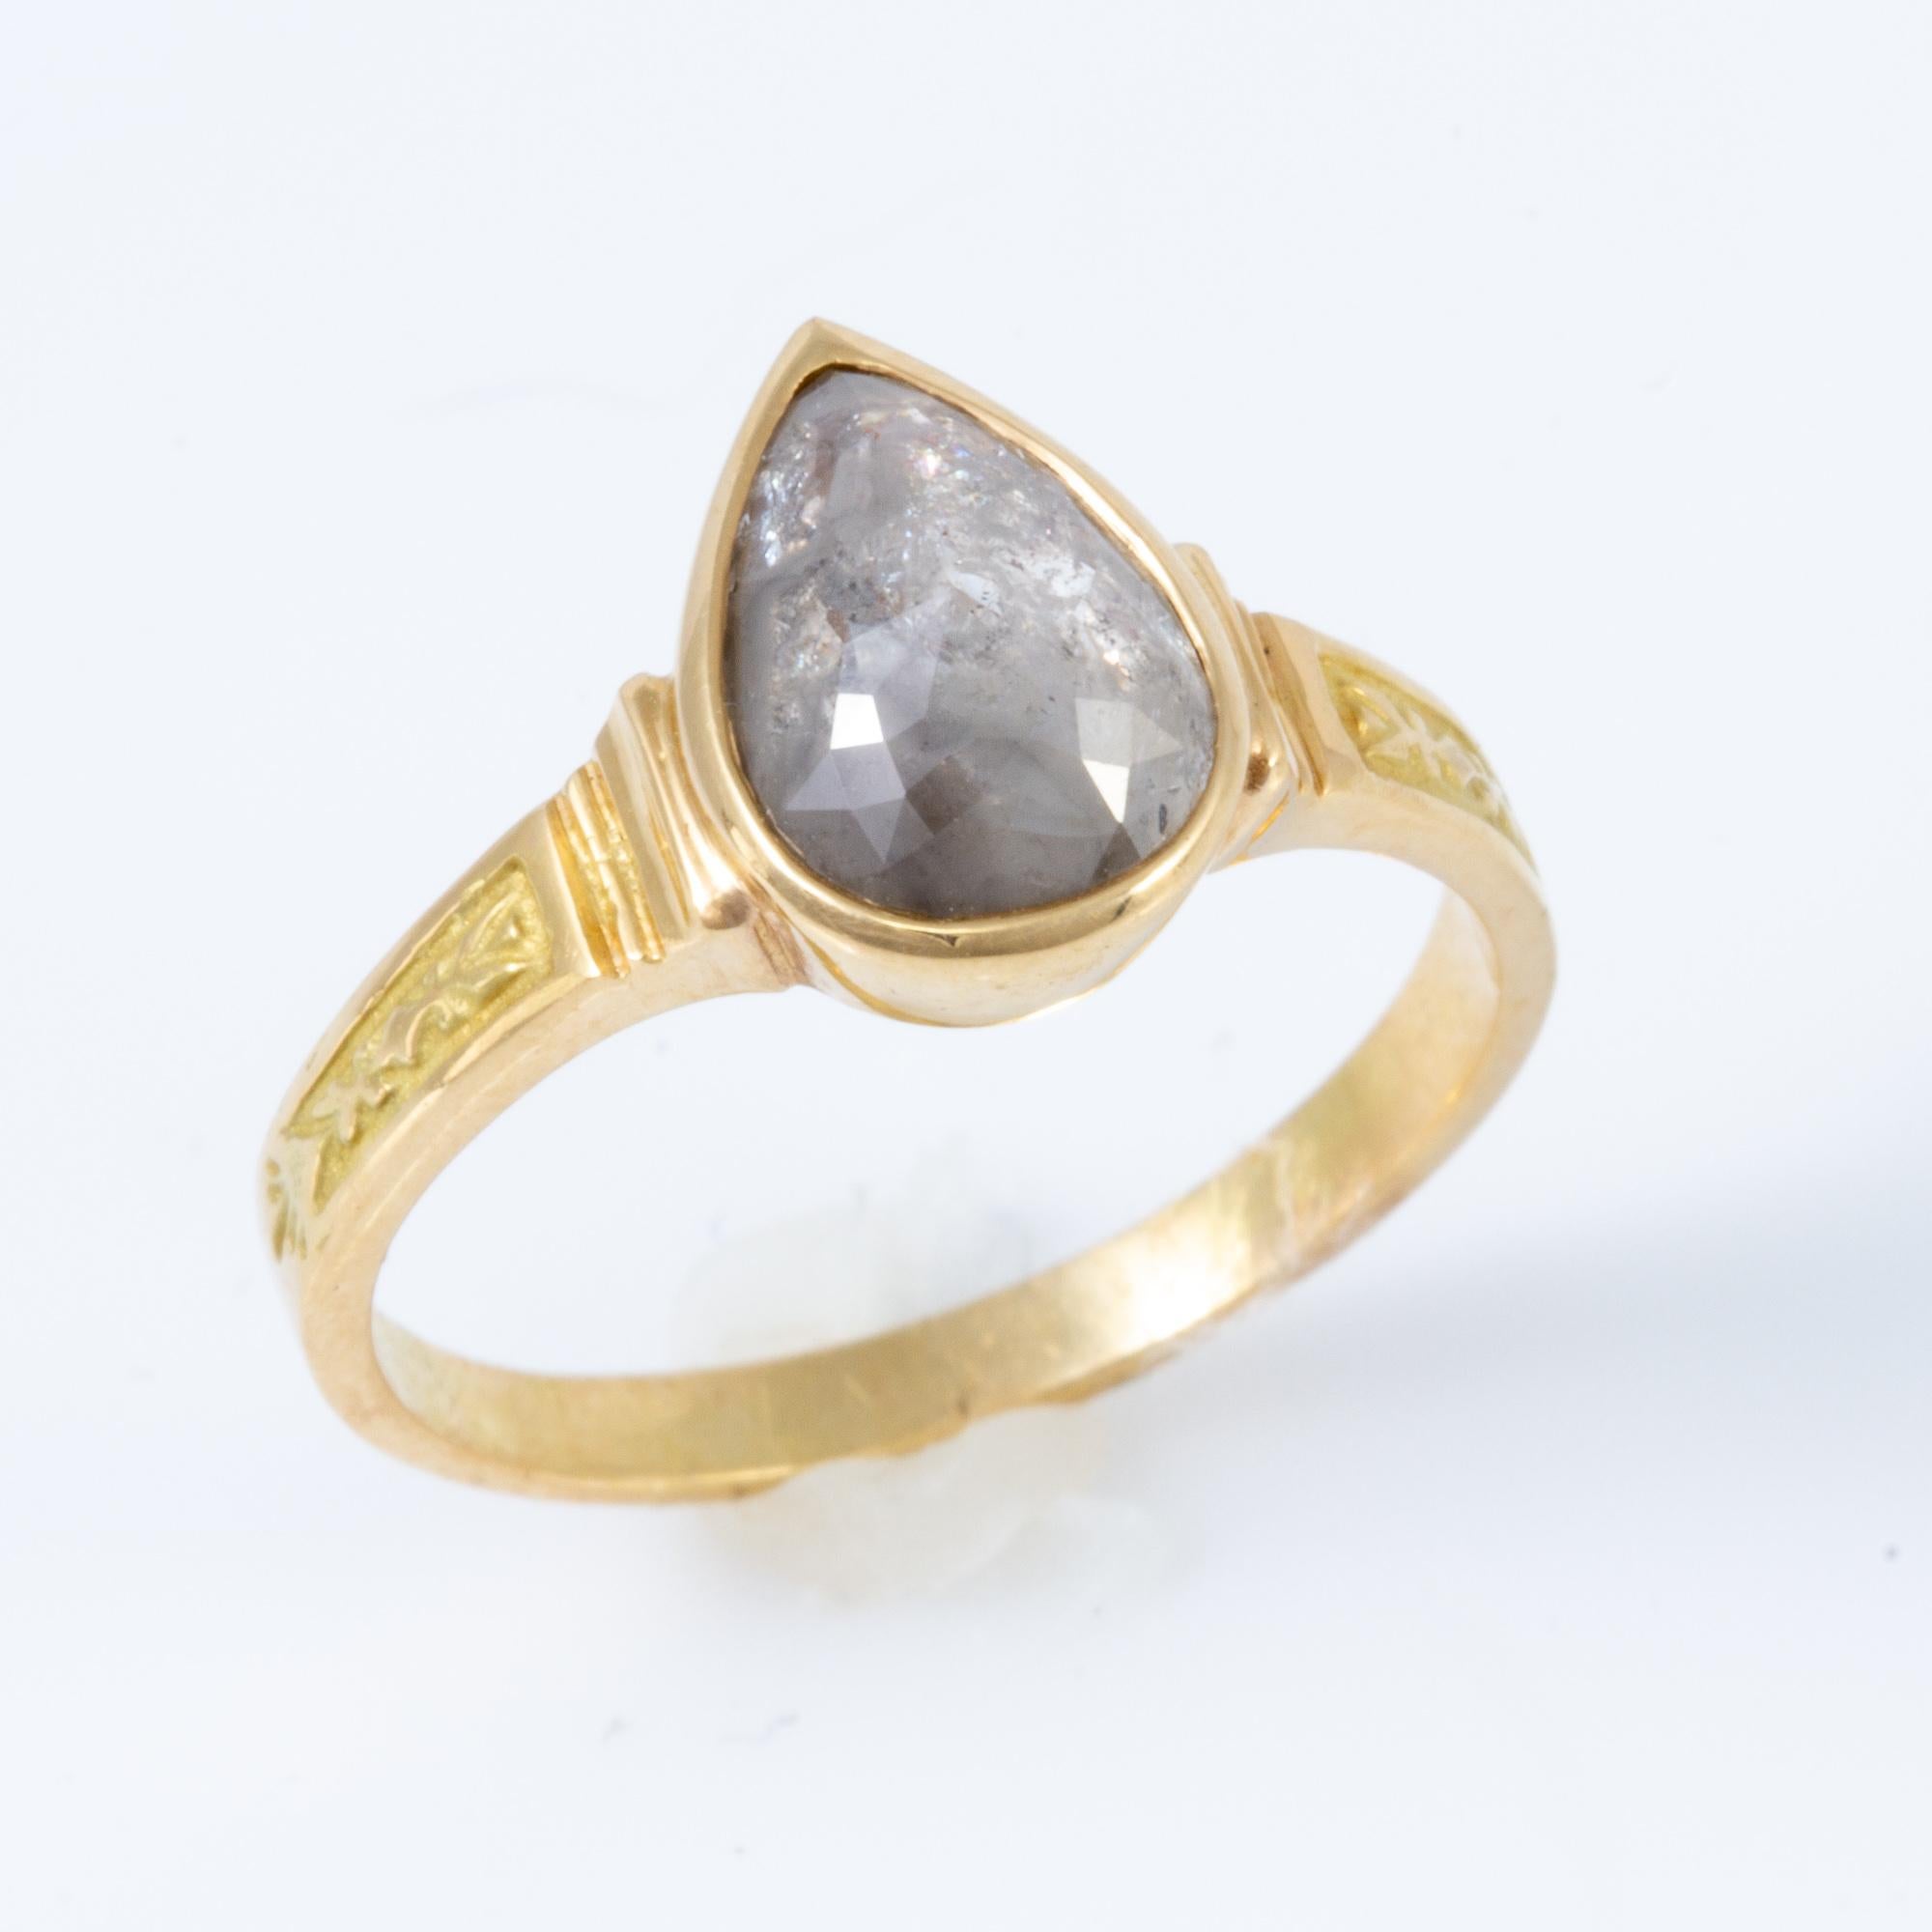 1.70 Carat Pear Shaped Raw Diamond in 18 Karat Gold Ring For Sale 1